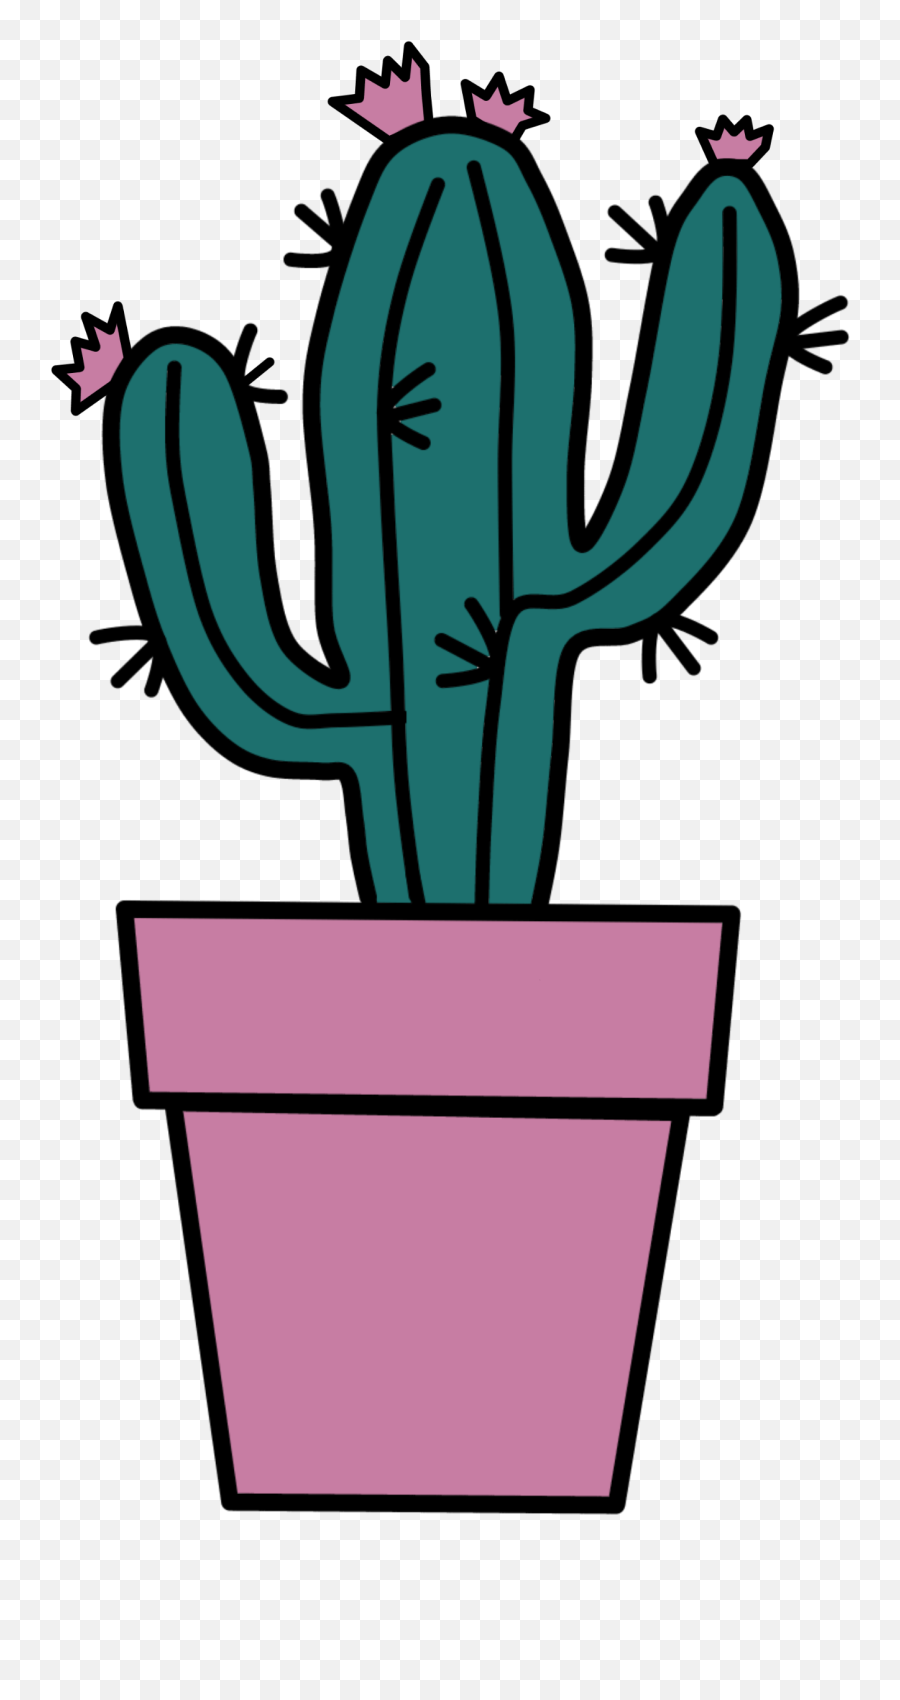 The Most Edited Cactus Picsart - Cactus Drawing Cute Emoji,Catus Emoji Clip Art